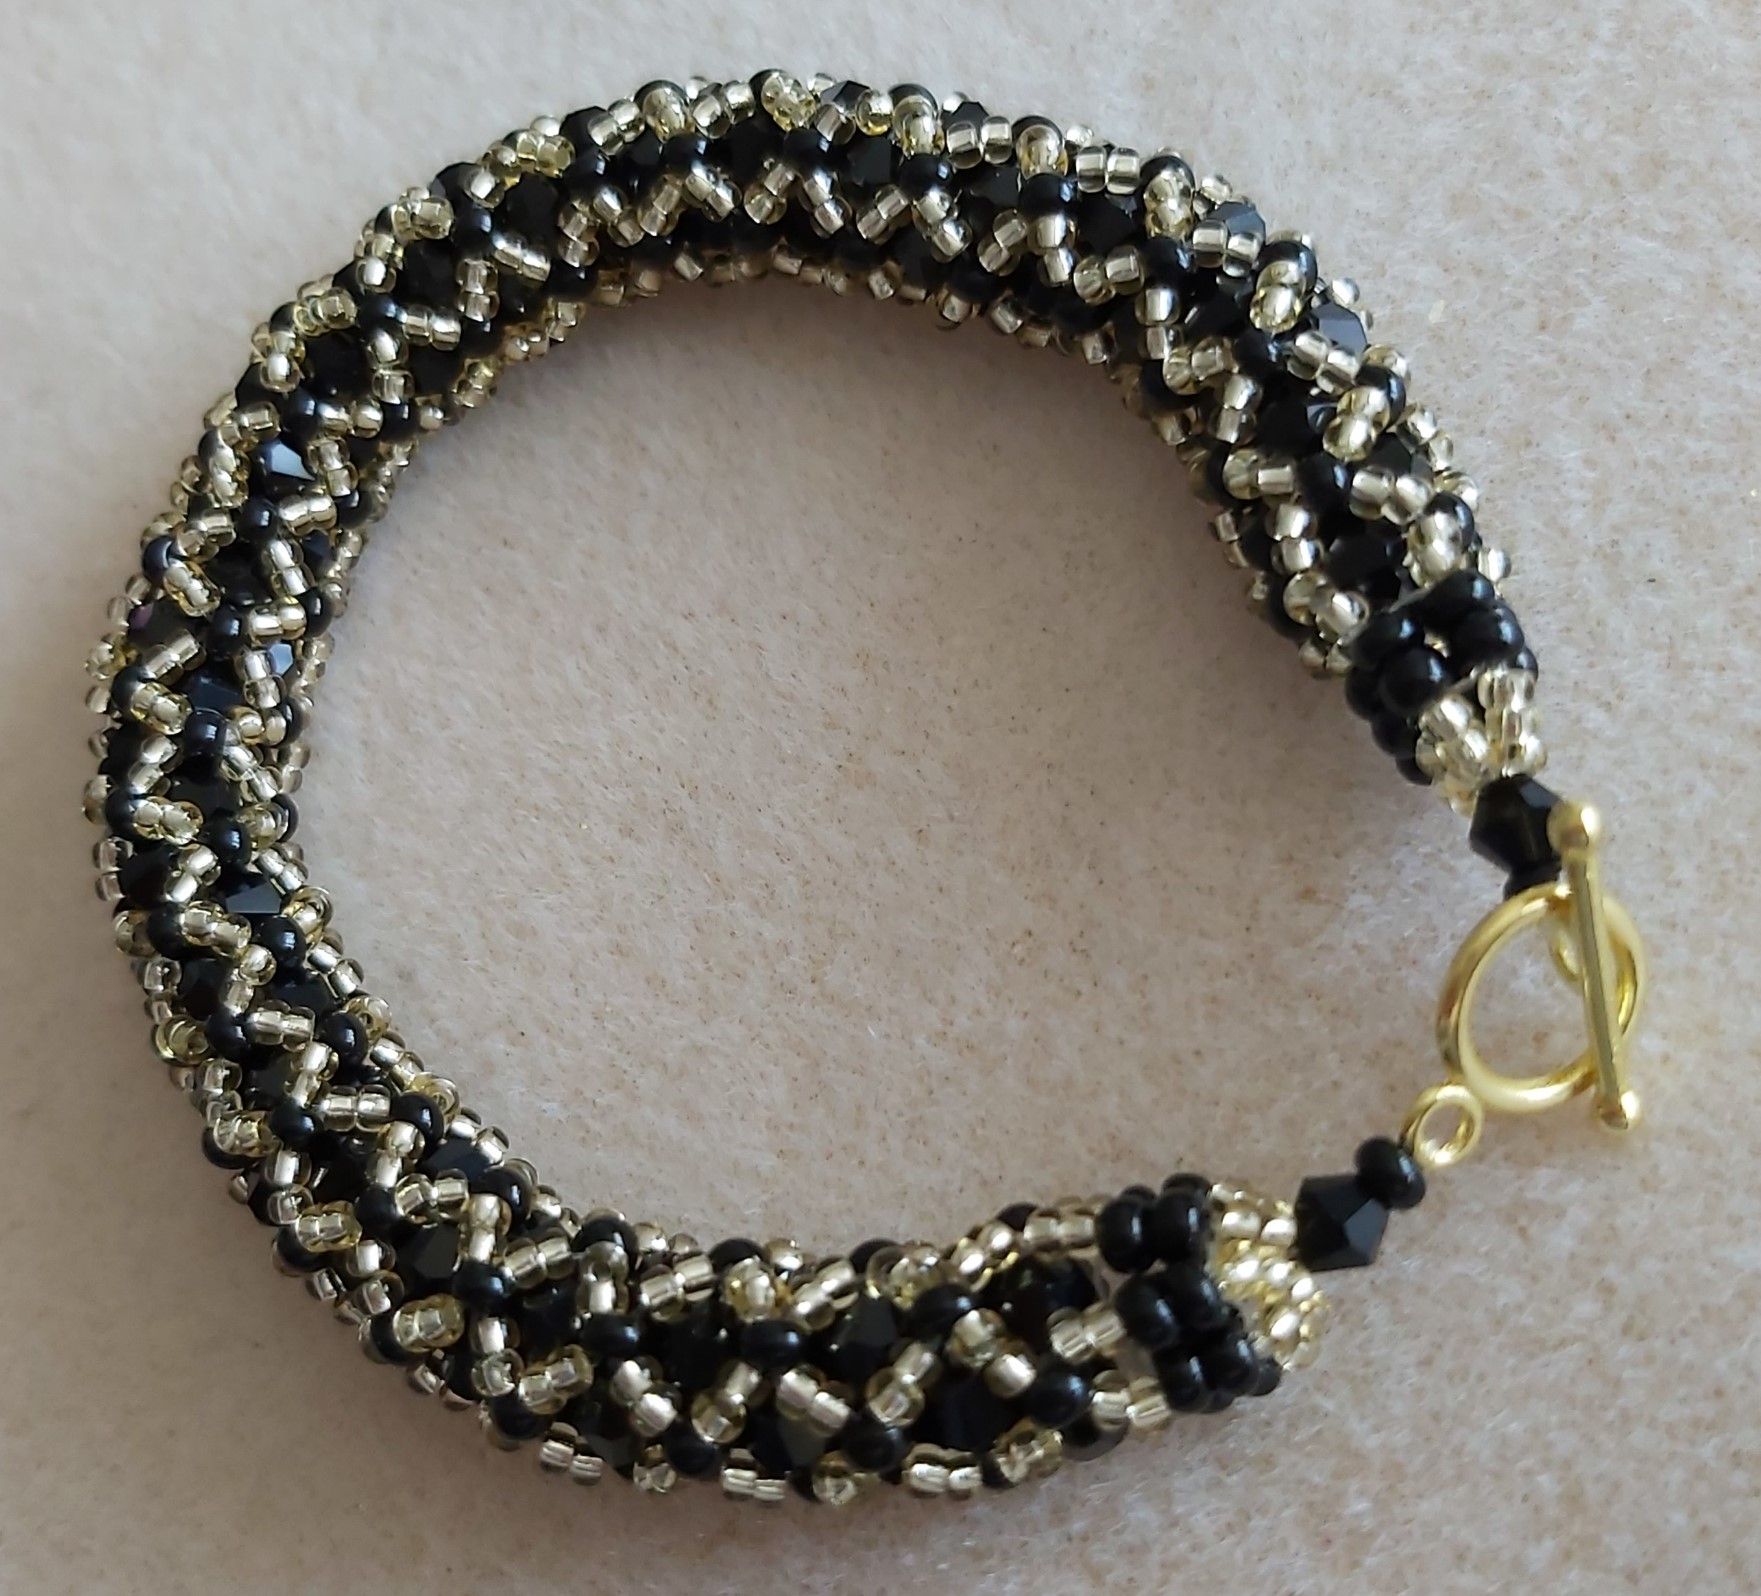 Black & Gold Tubular Netting Bracelet - 4mm Bicones and Miyuki seed beads 7.5"